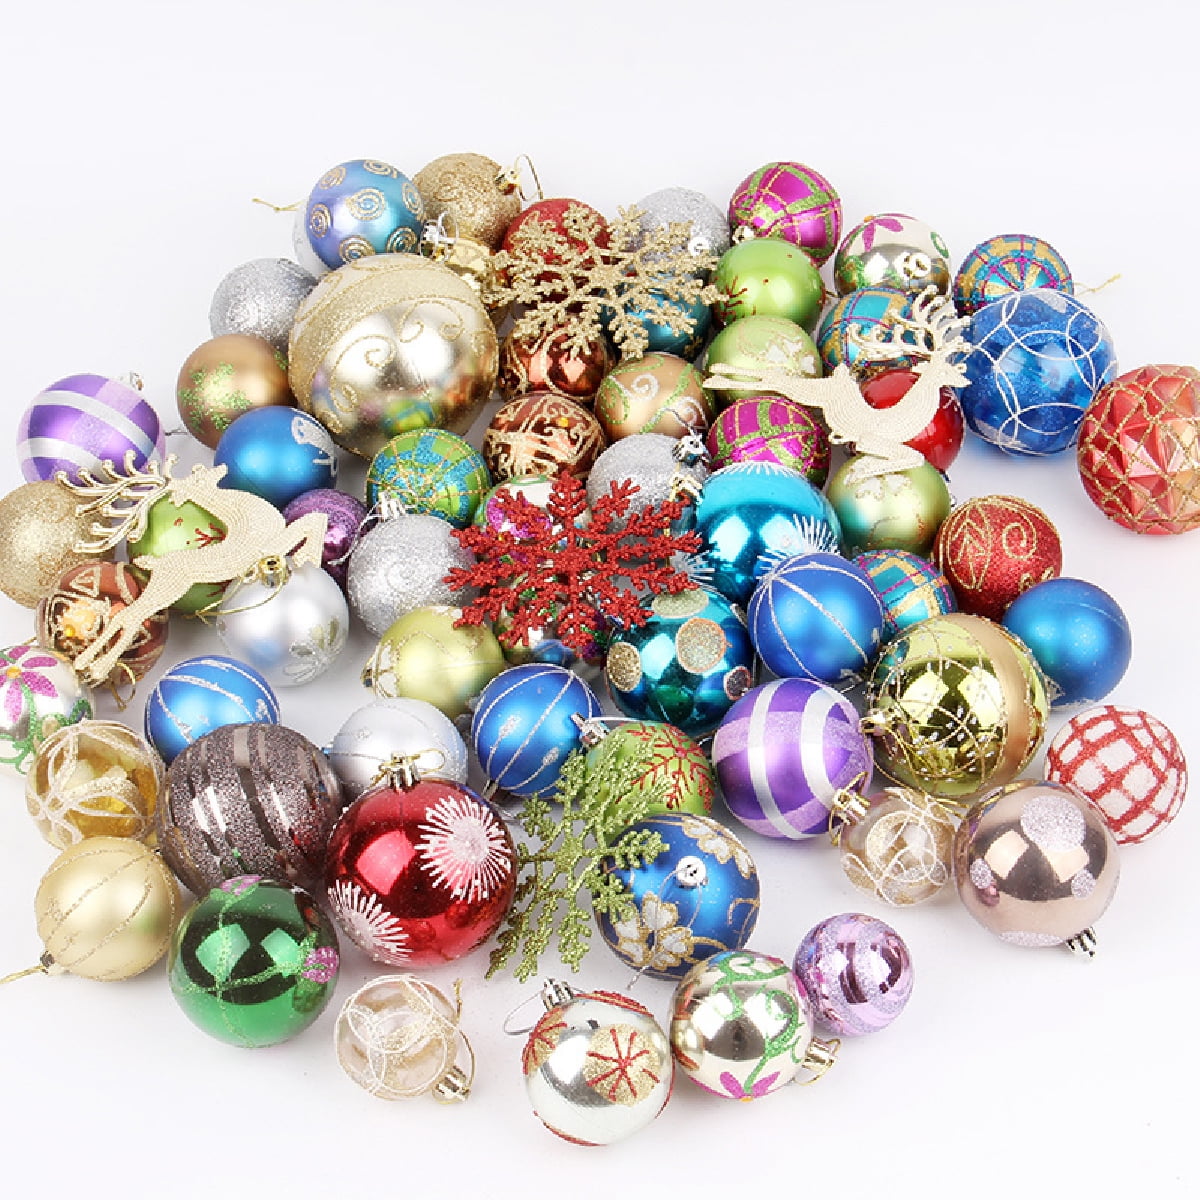 3D Crystal Gifts 8pcs Christmas Ornaments Set Photo Cube Crystal Gifts Crystal Photo Frame